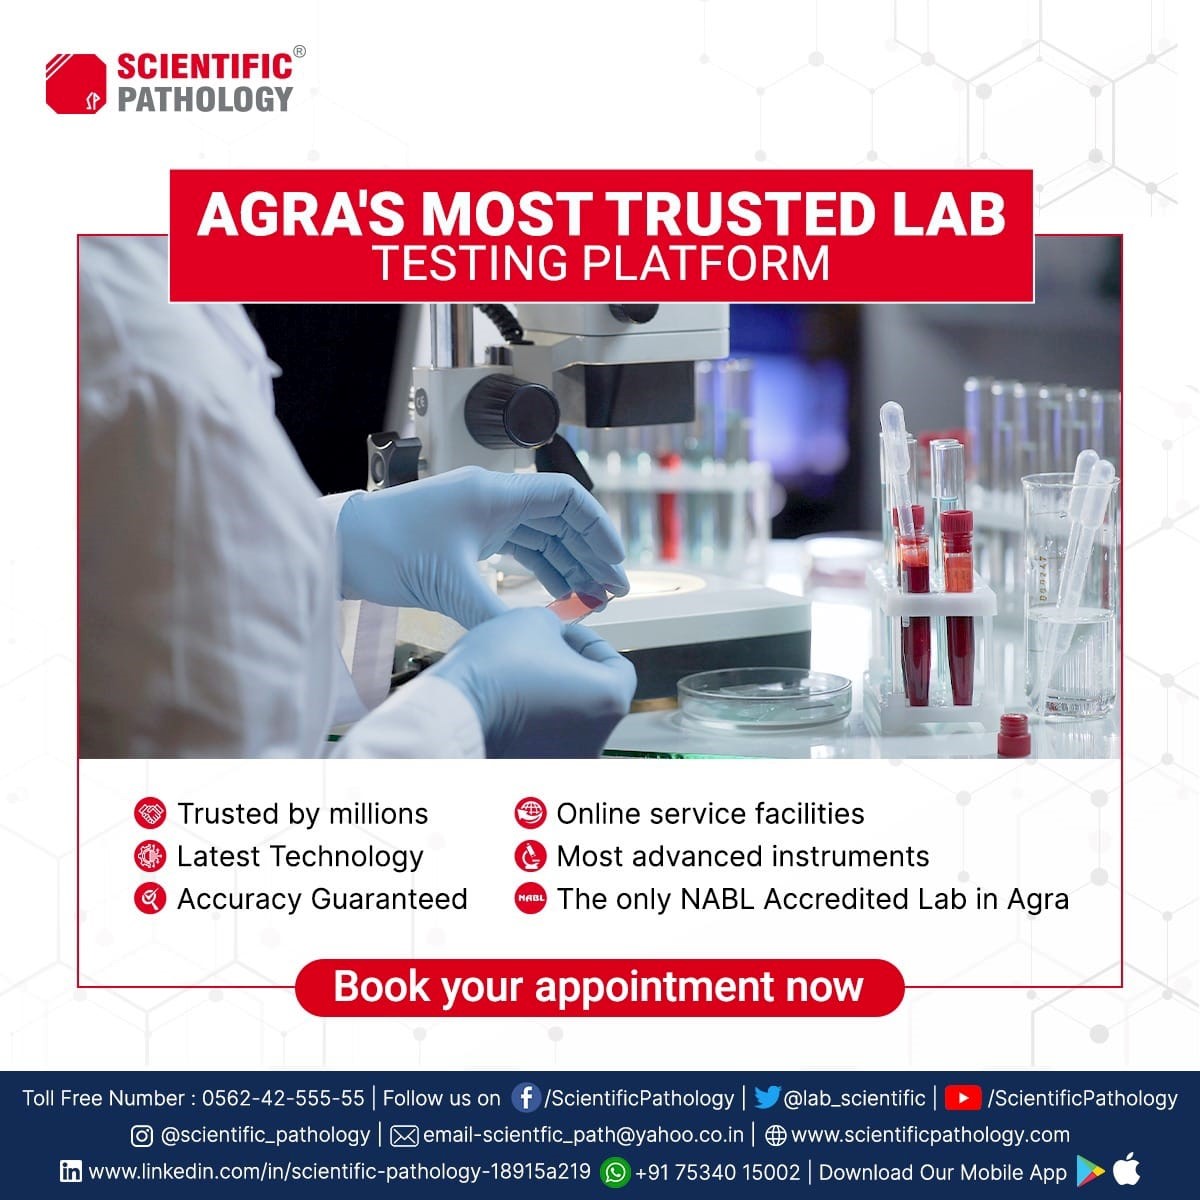  Best Diagnostic Center In Agra | Pathology Laboratory Near Me - Scientificpathology.com